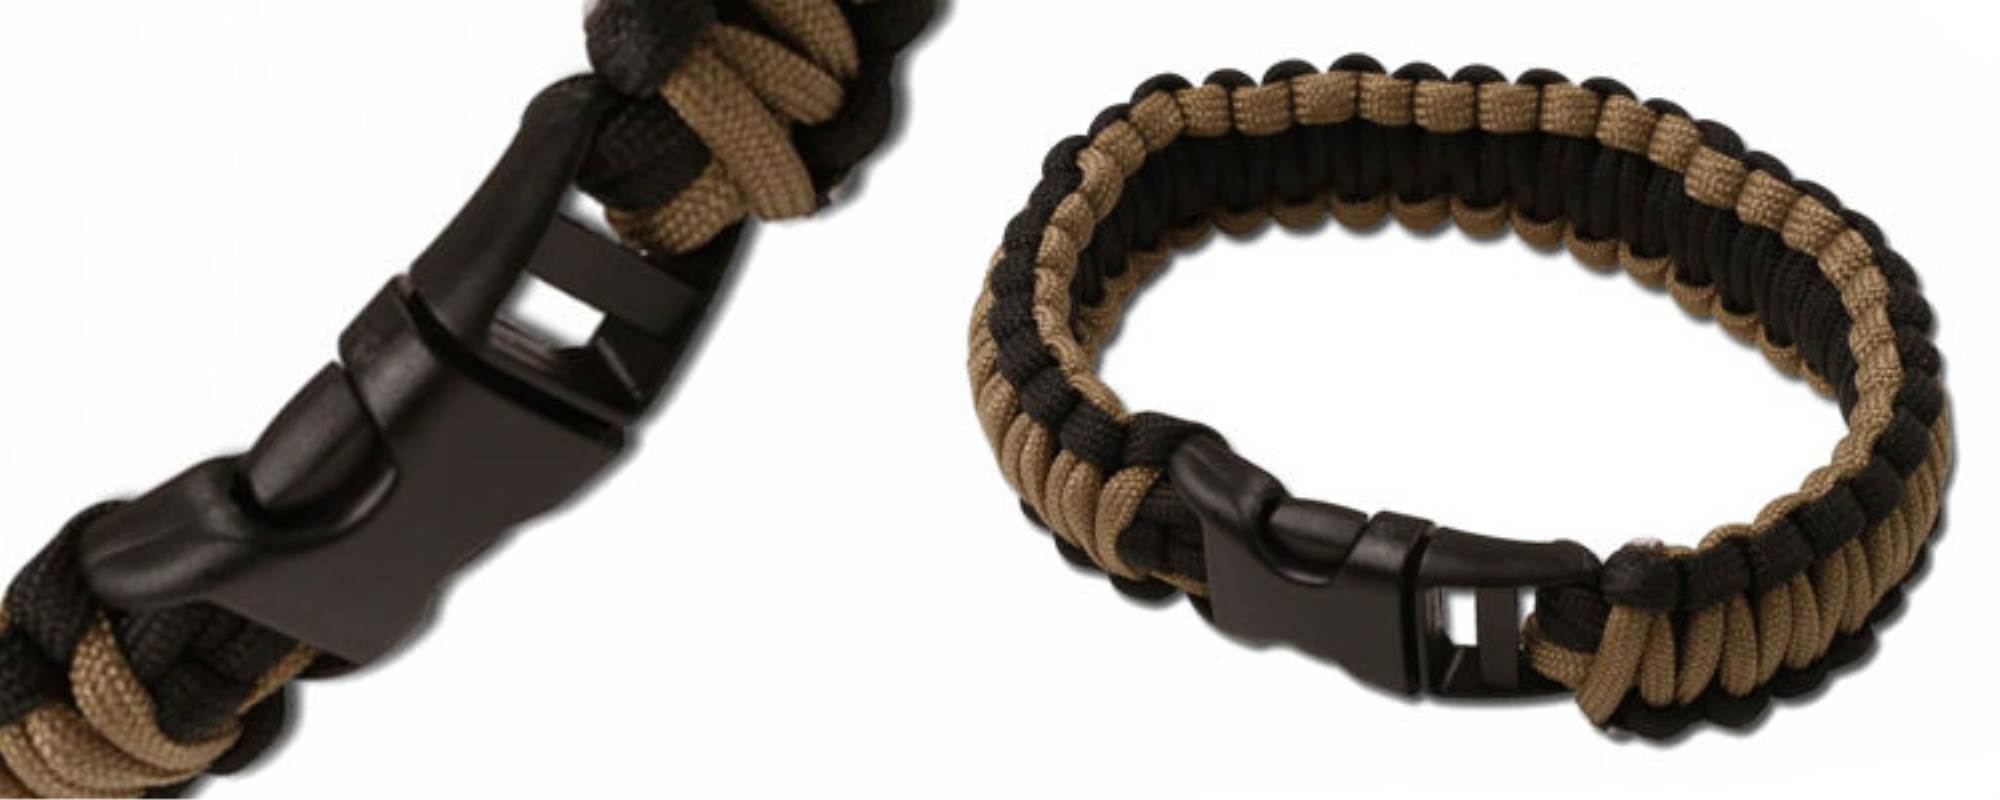 Black/Coyote Paracord Survival Bracelet - Large - Tactical Survival Tools  at